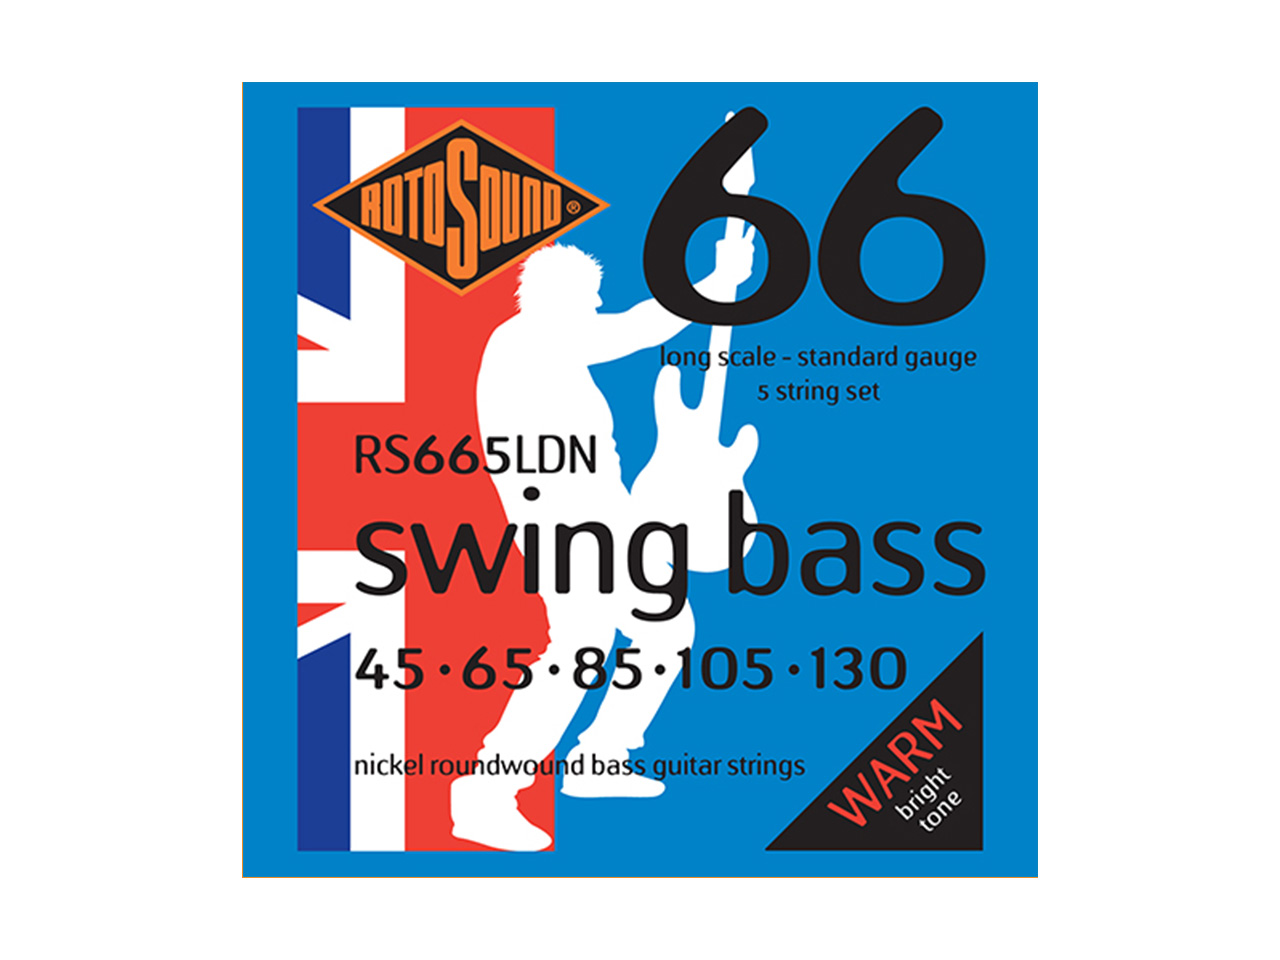 ROTOSOUND ( ロトサウンド ) SWING BASS 66 5-STRING Standard Nickel Roundwound / RS665LDN 45-1130 (エレキベース弦/LONG SCALE)